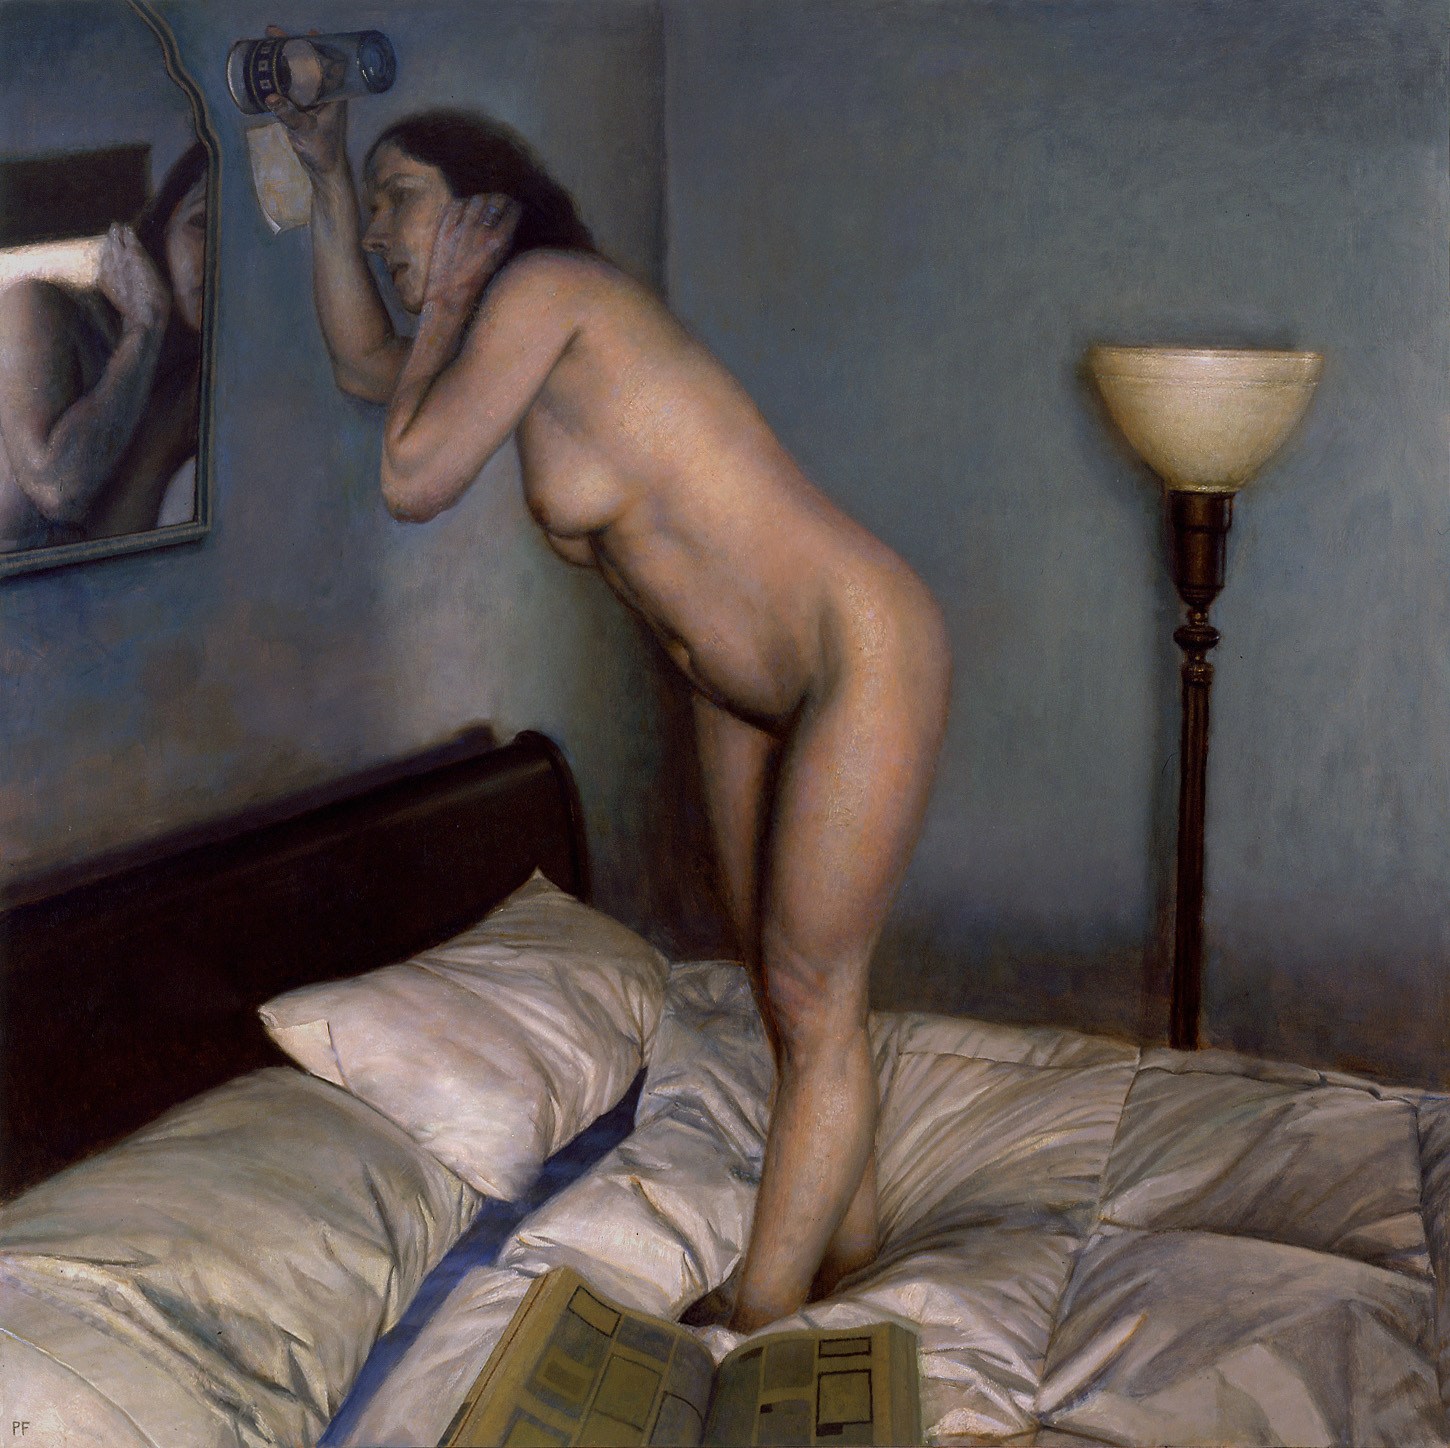 paul fenniak, Eavesdropper, 2006, oil on canvas, 48 x 48 inches